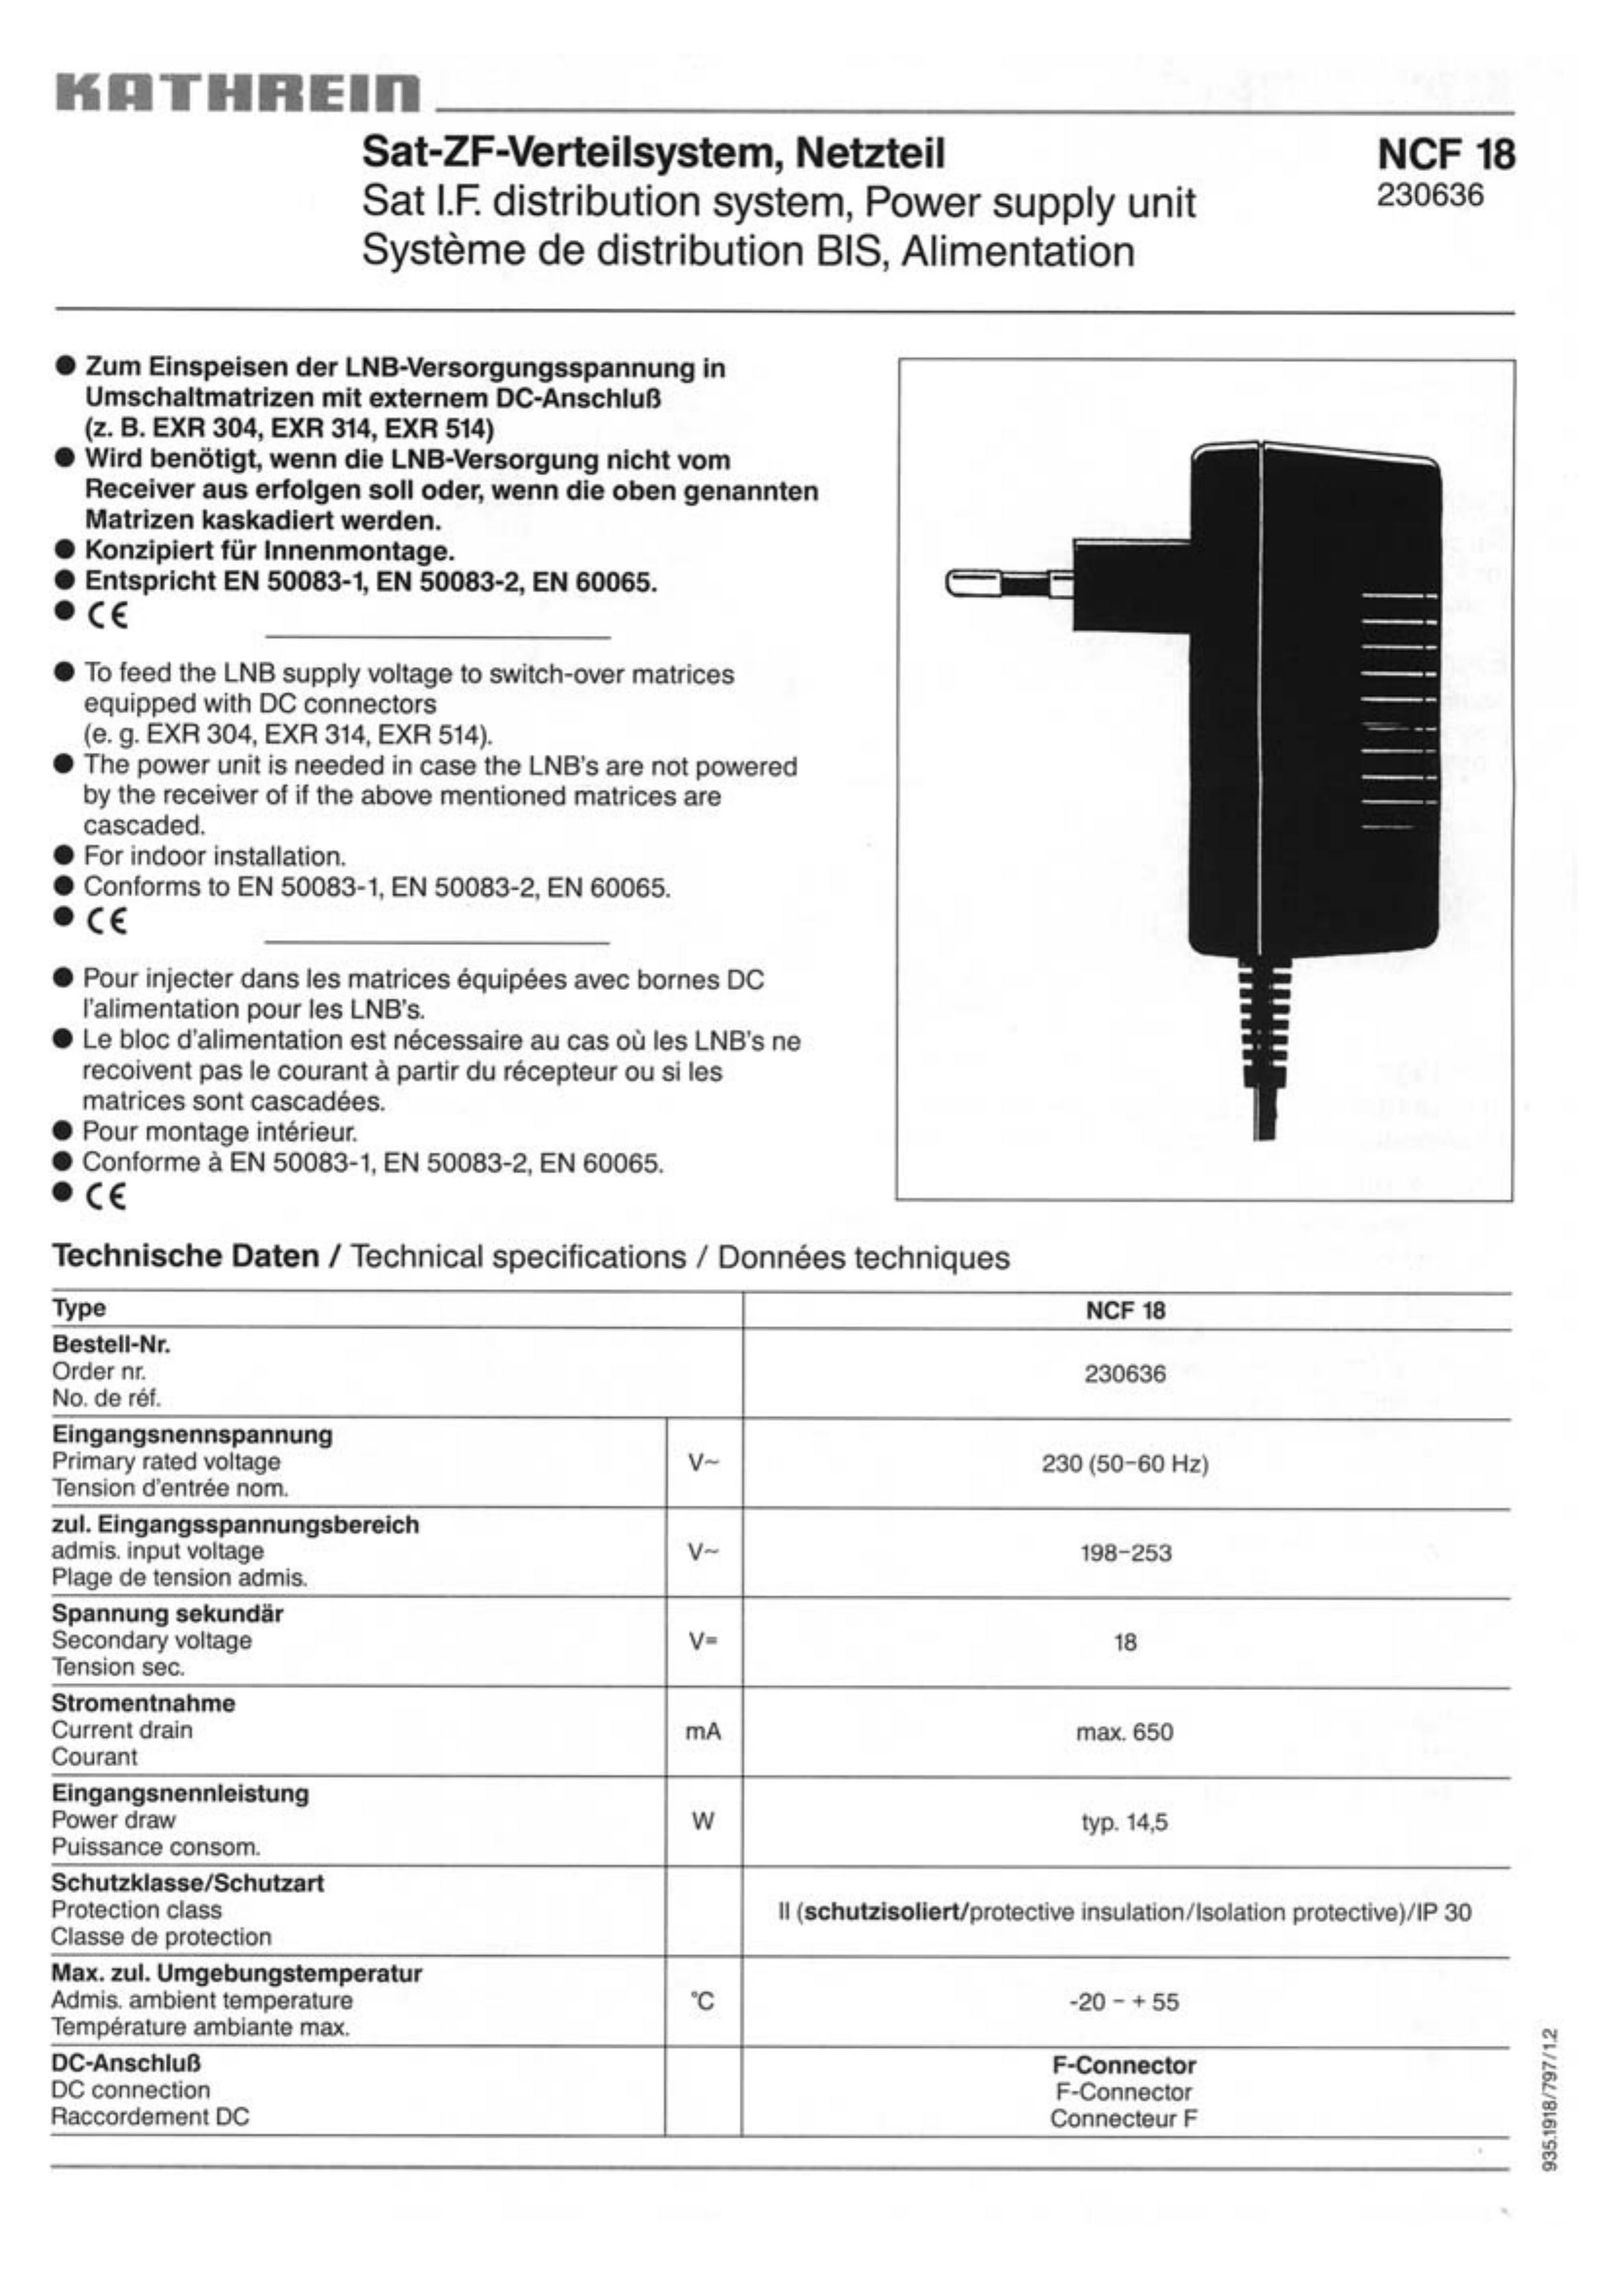 Kathrein NCF 18 Power Supply User Manual